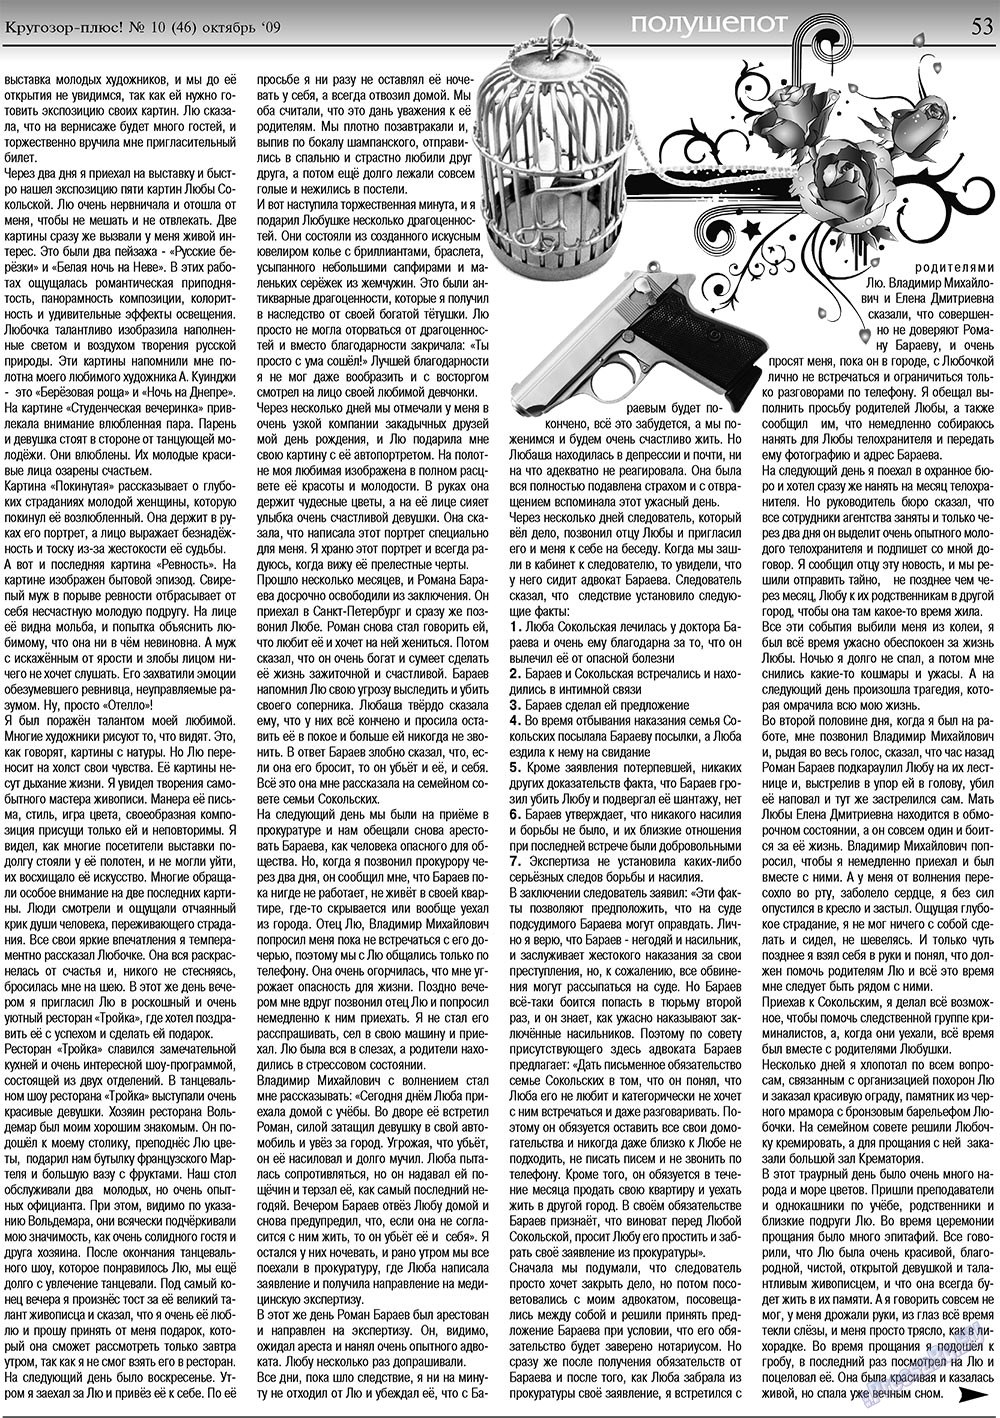 Кругозор плюс! (газета). 2009 год, номер 10, стр. 53